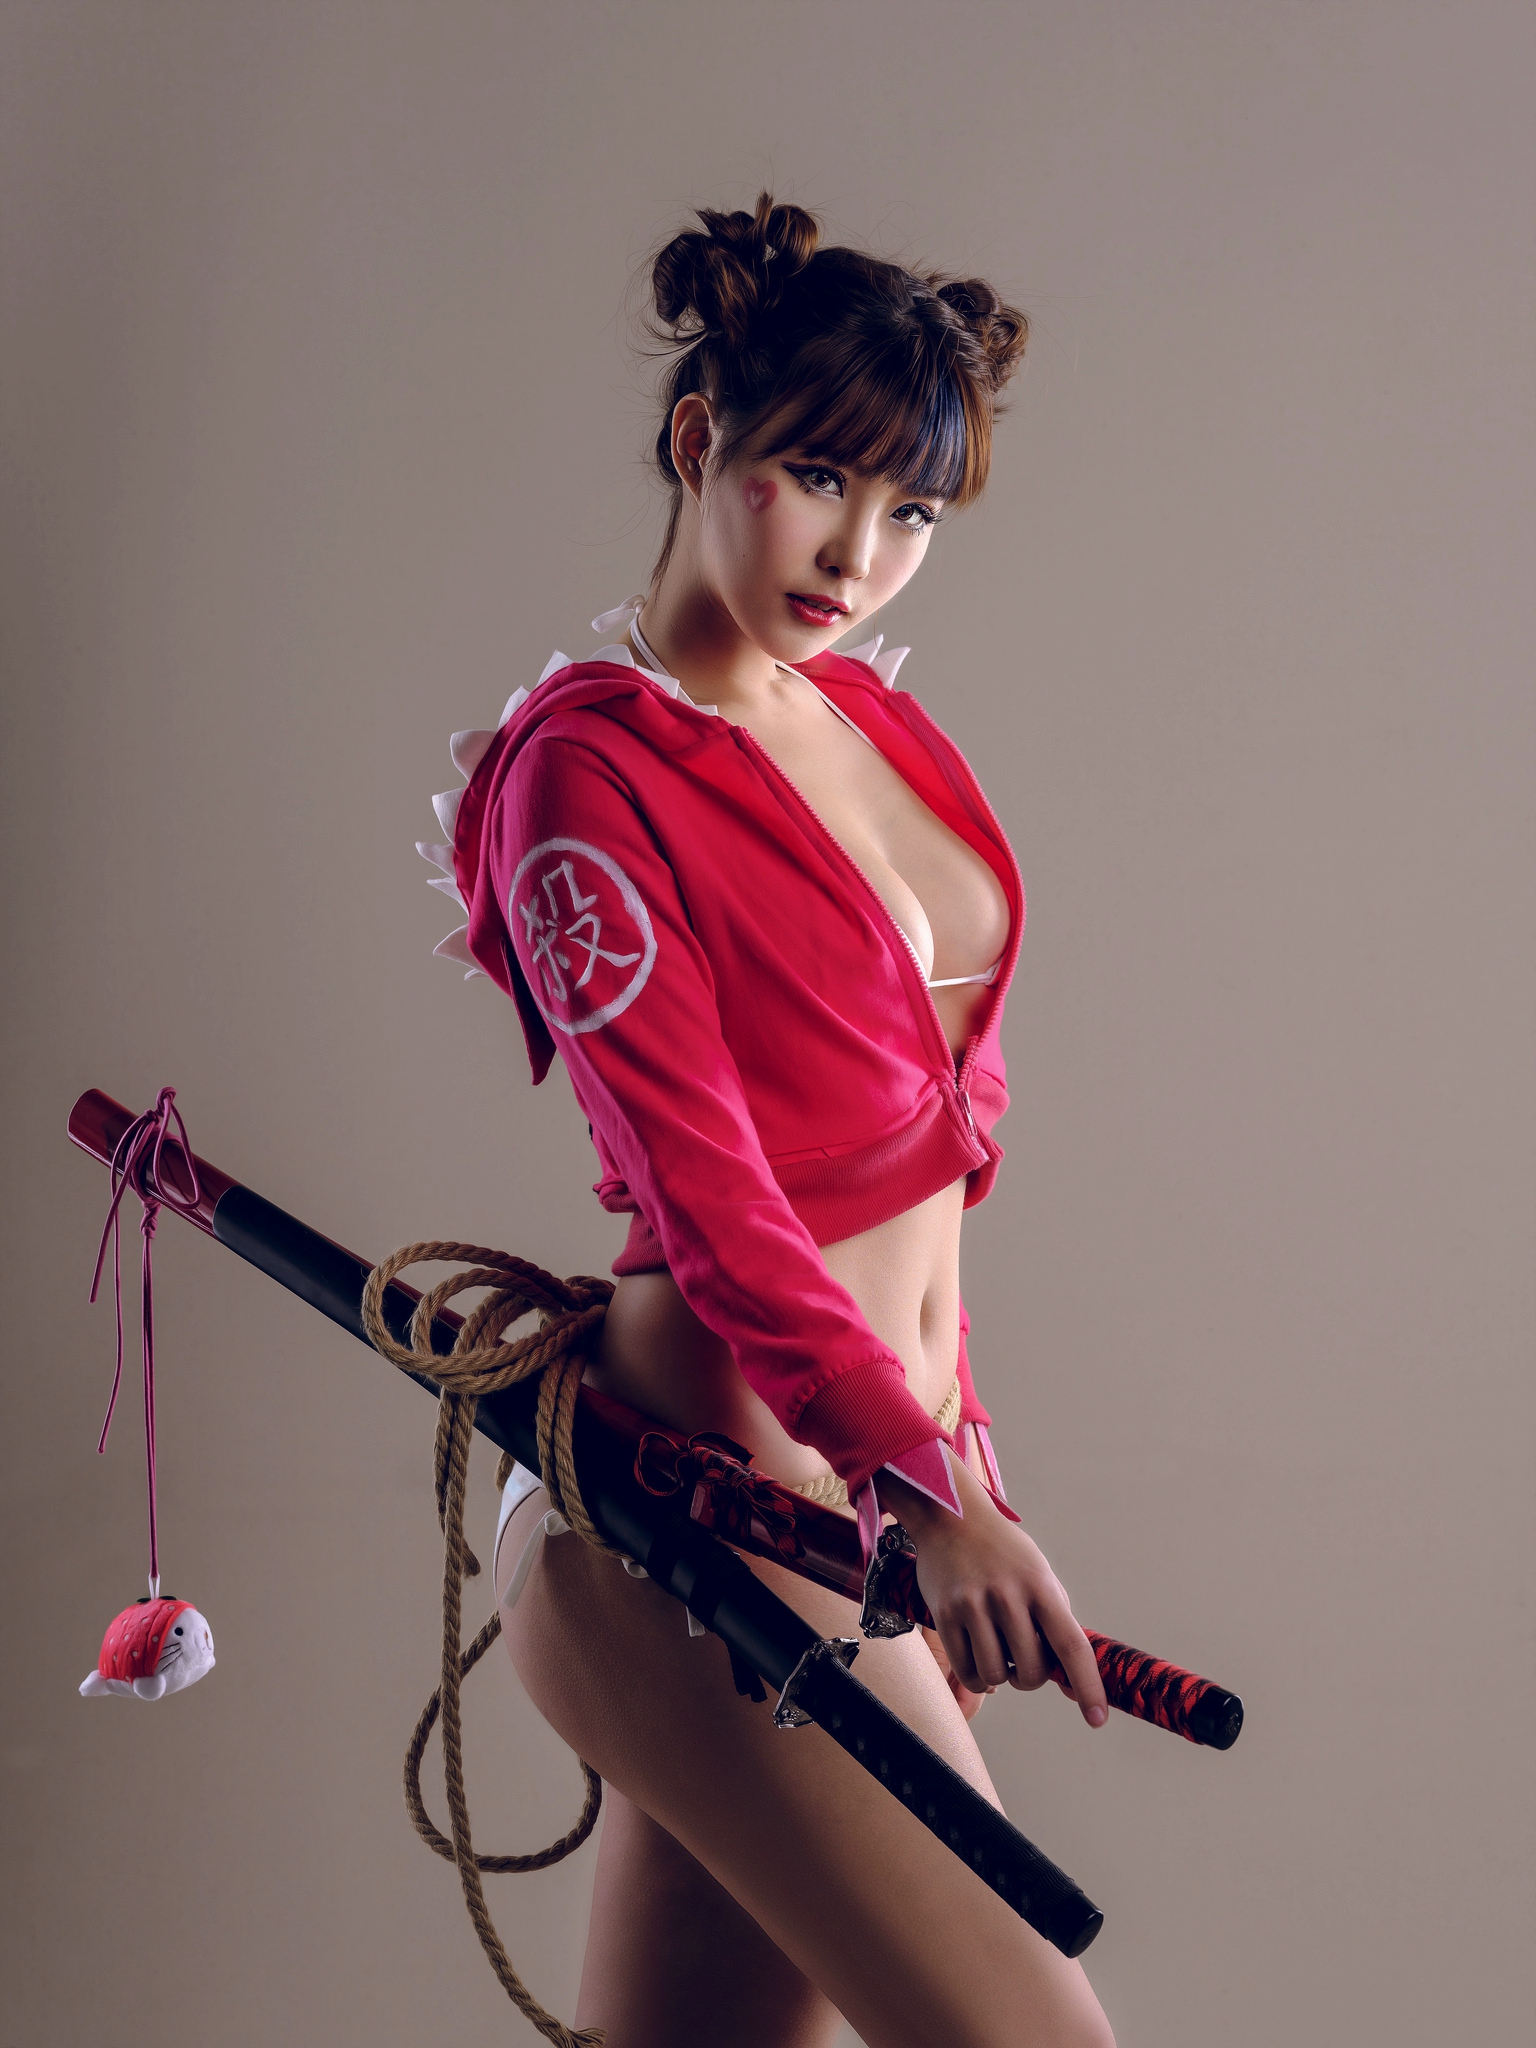 Girl samurai beautiful · free photo